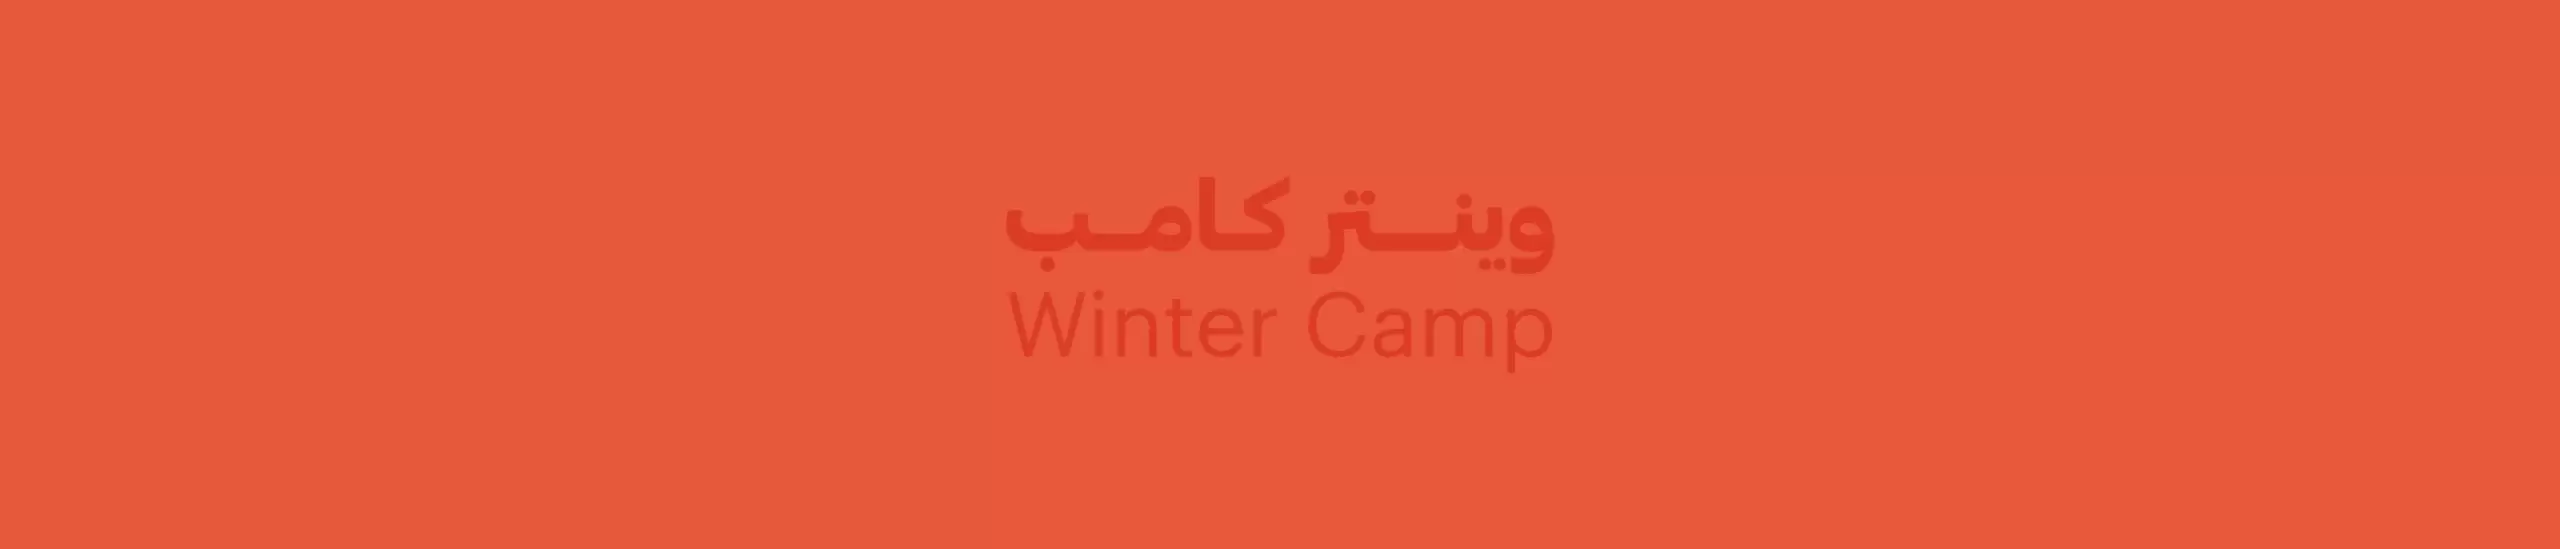 Winter Camp